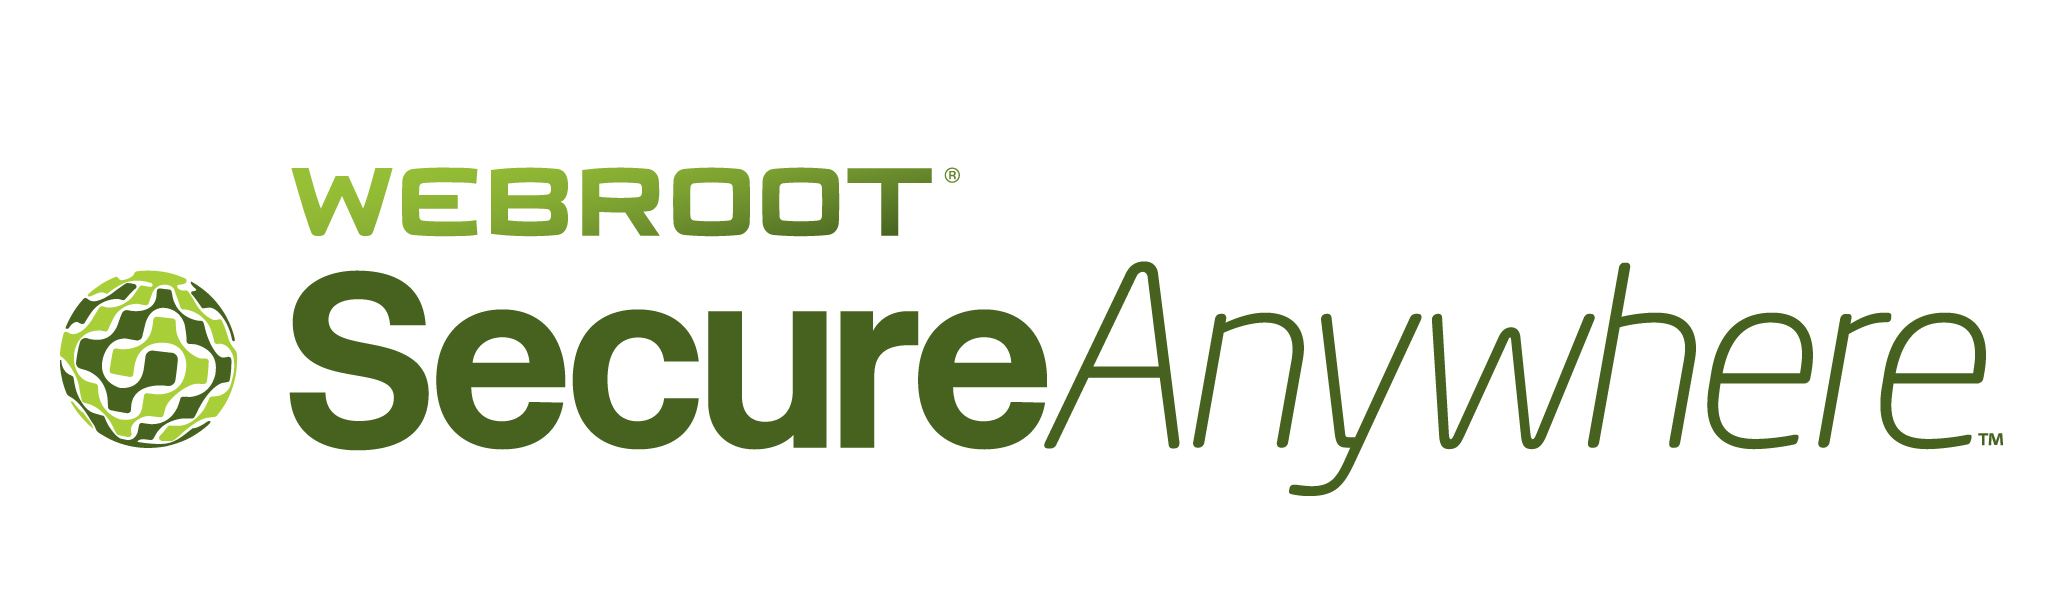 Webroot secure anywhere logo